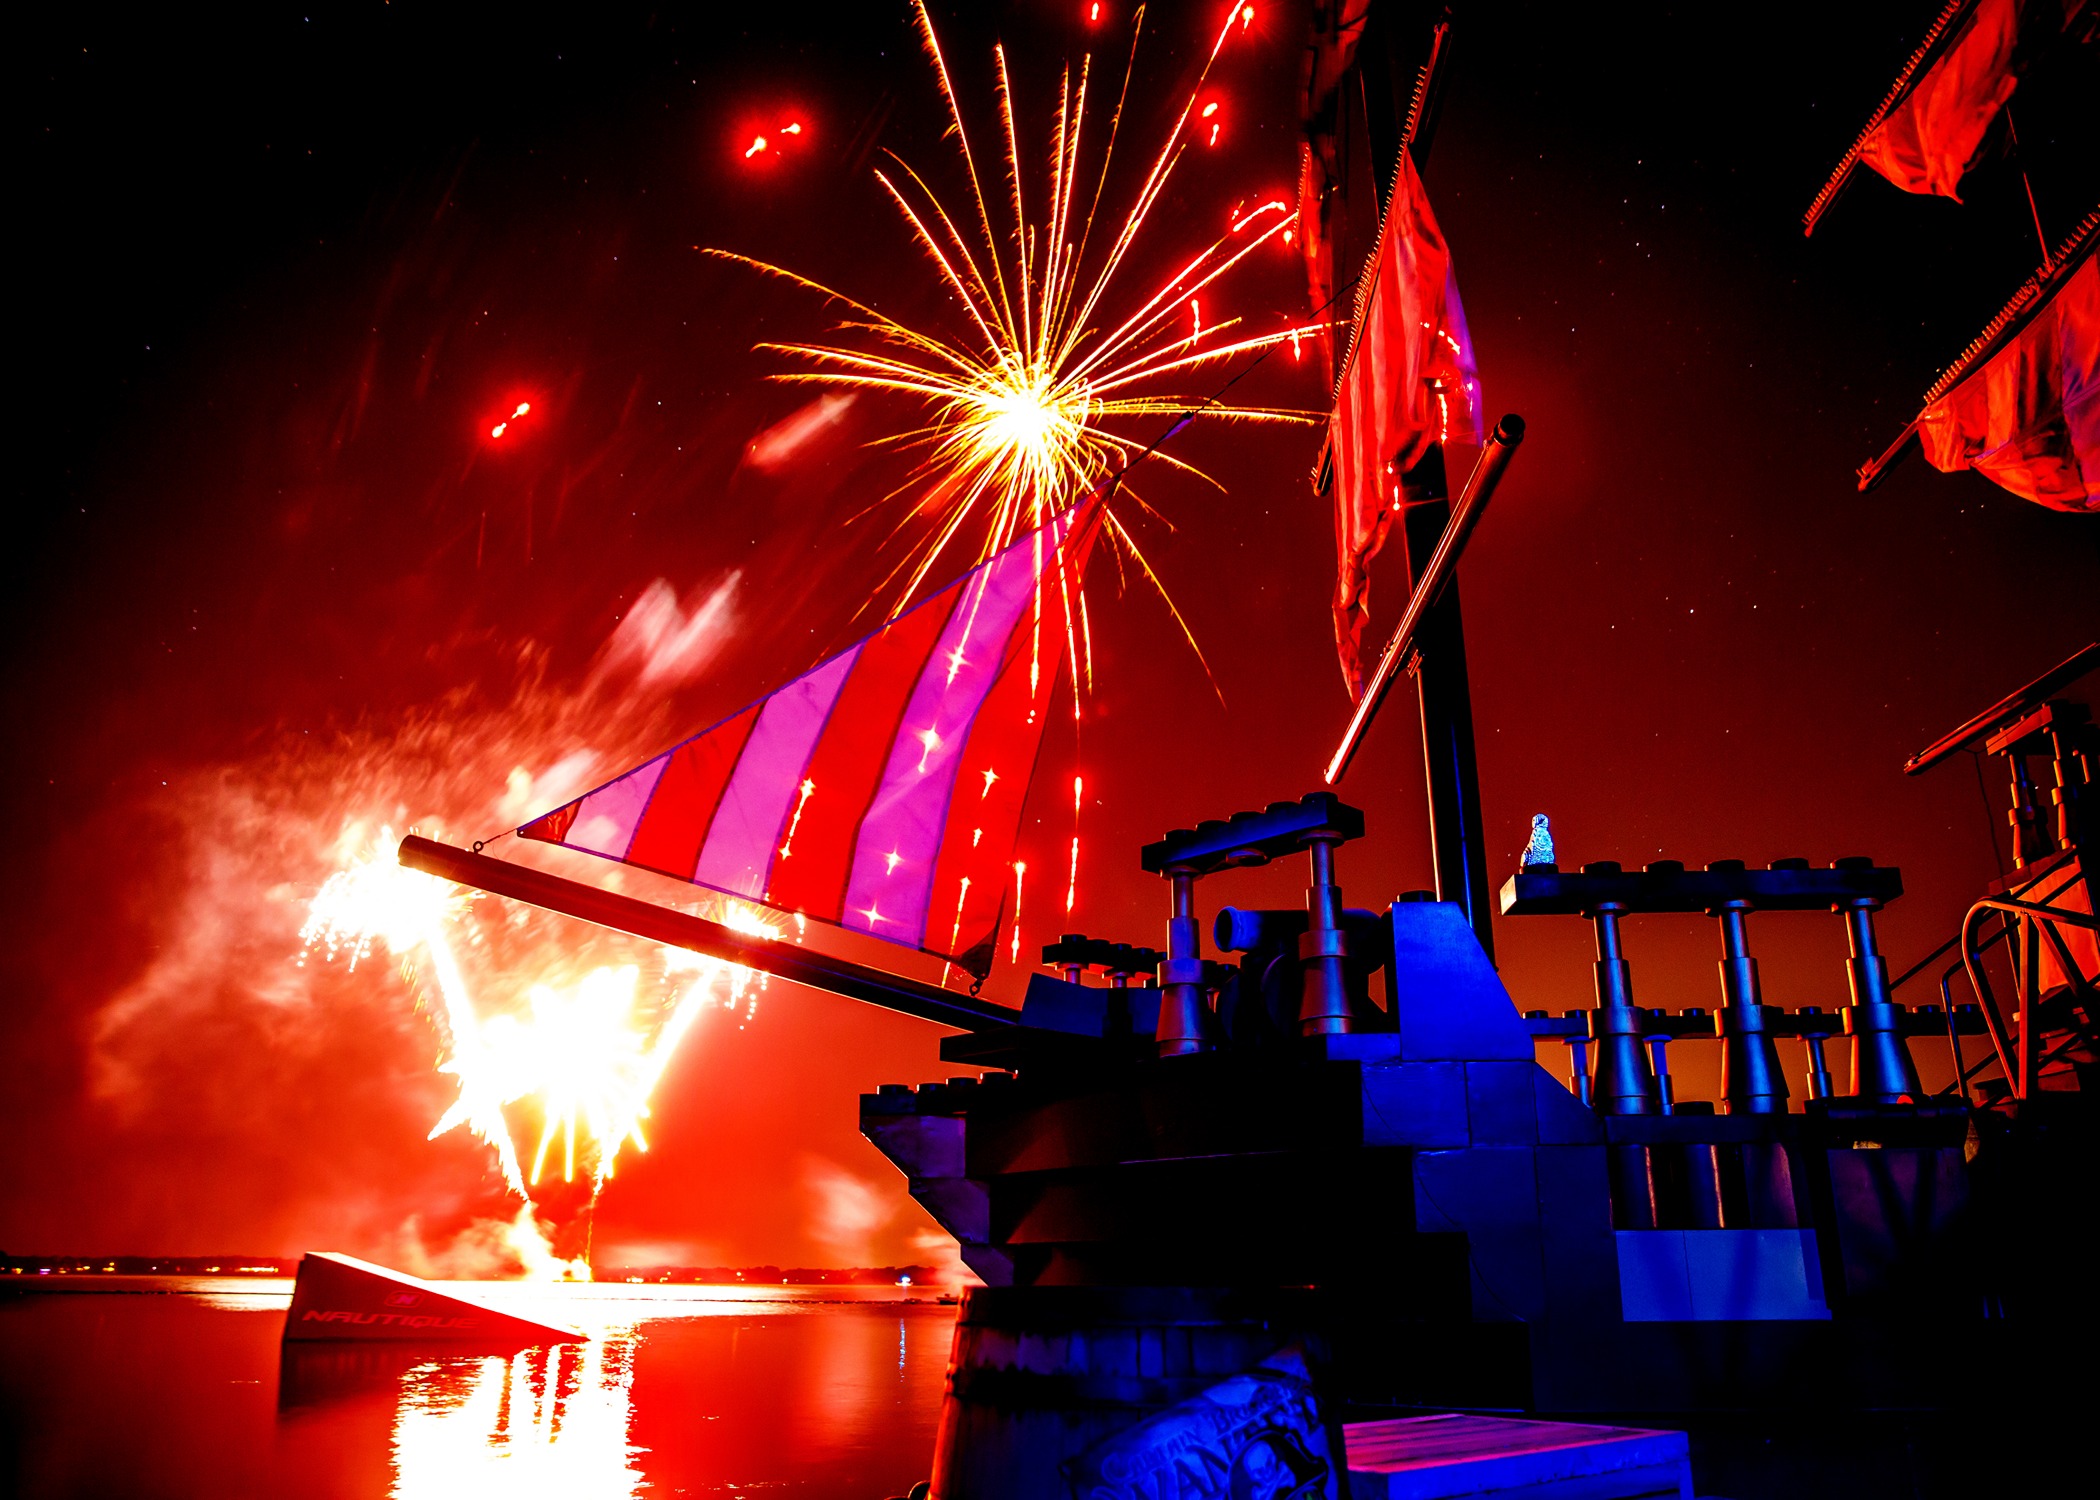 Fireworks On Lake LEGOLAND Fl7x5